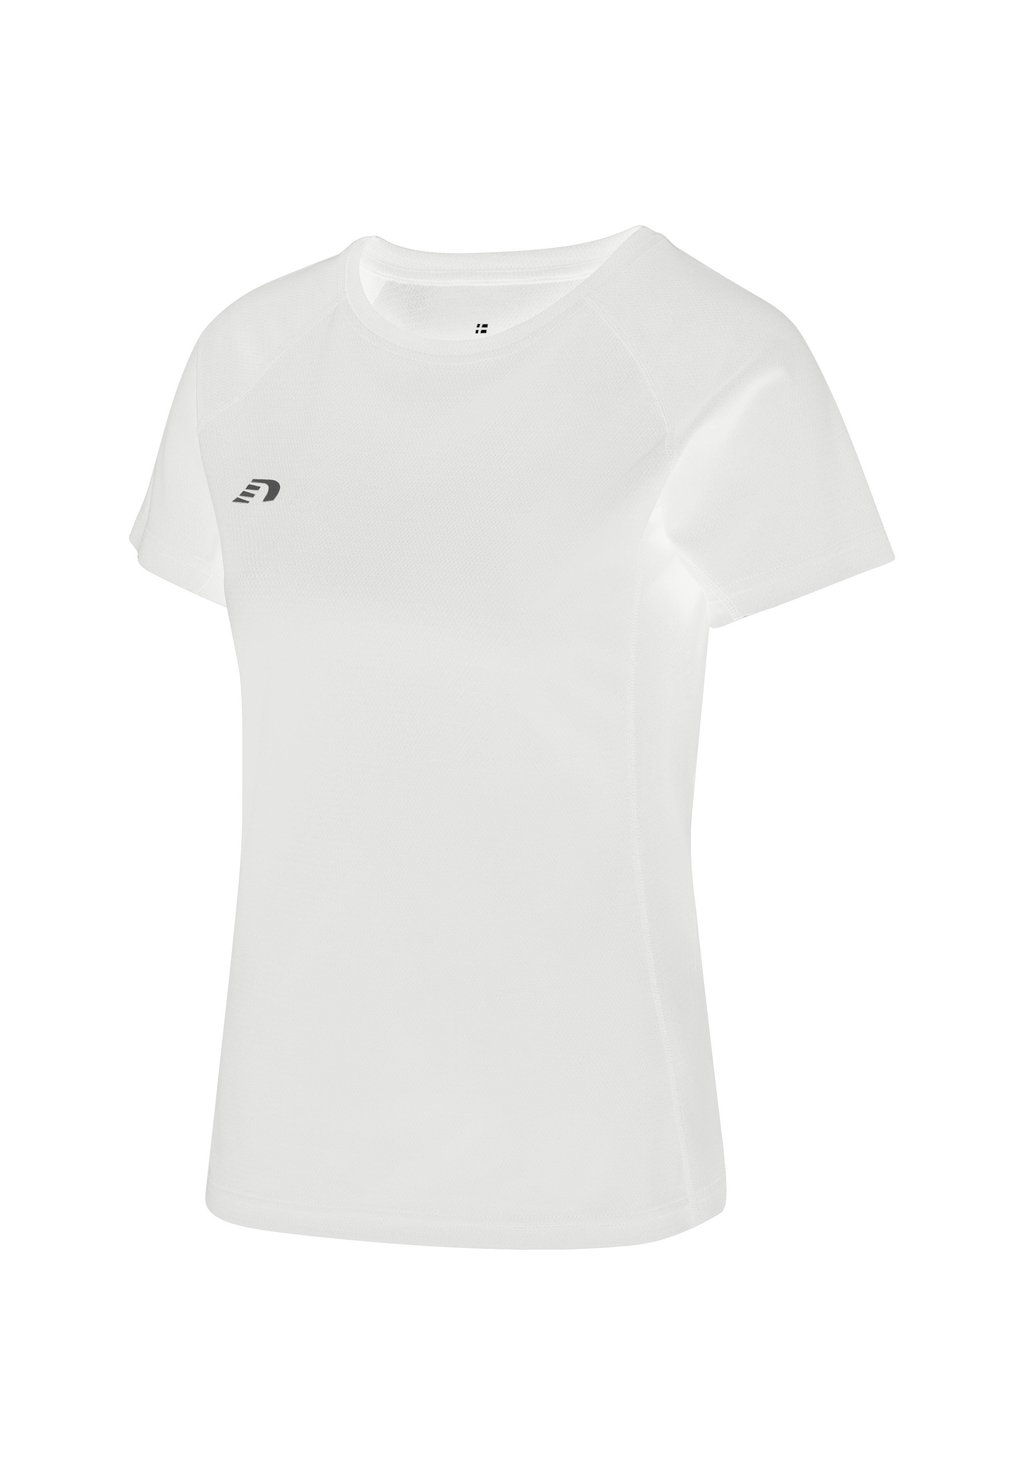 Спортивная футболка Newline, белый